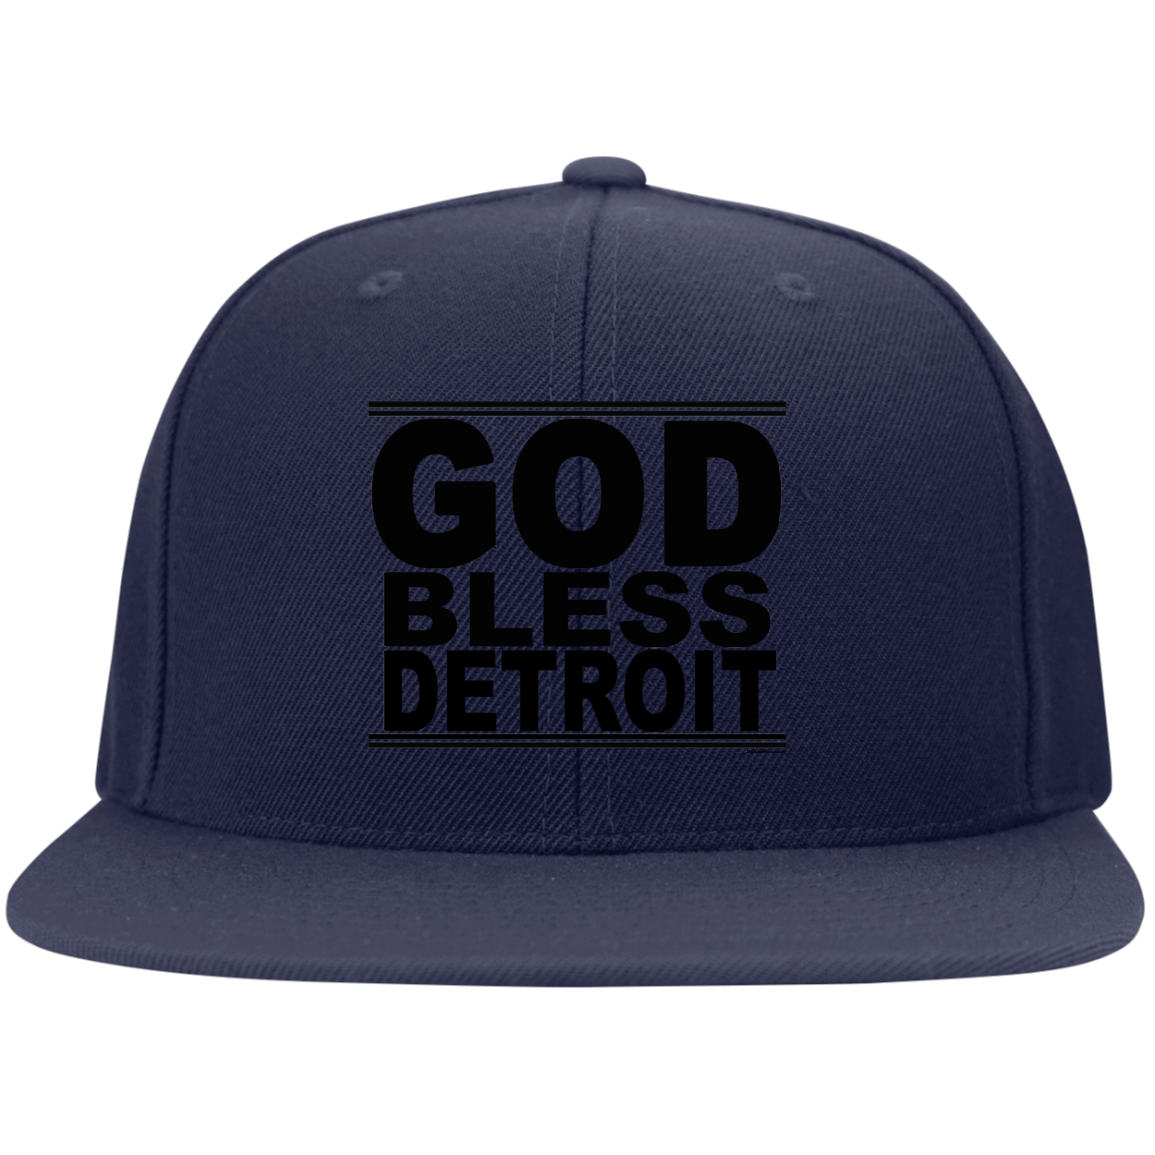 #GodBlessDetroit - Snapback Hat